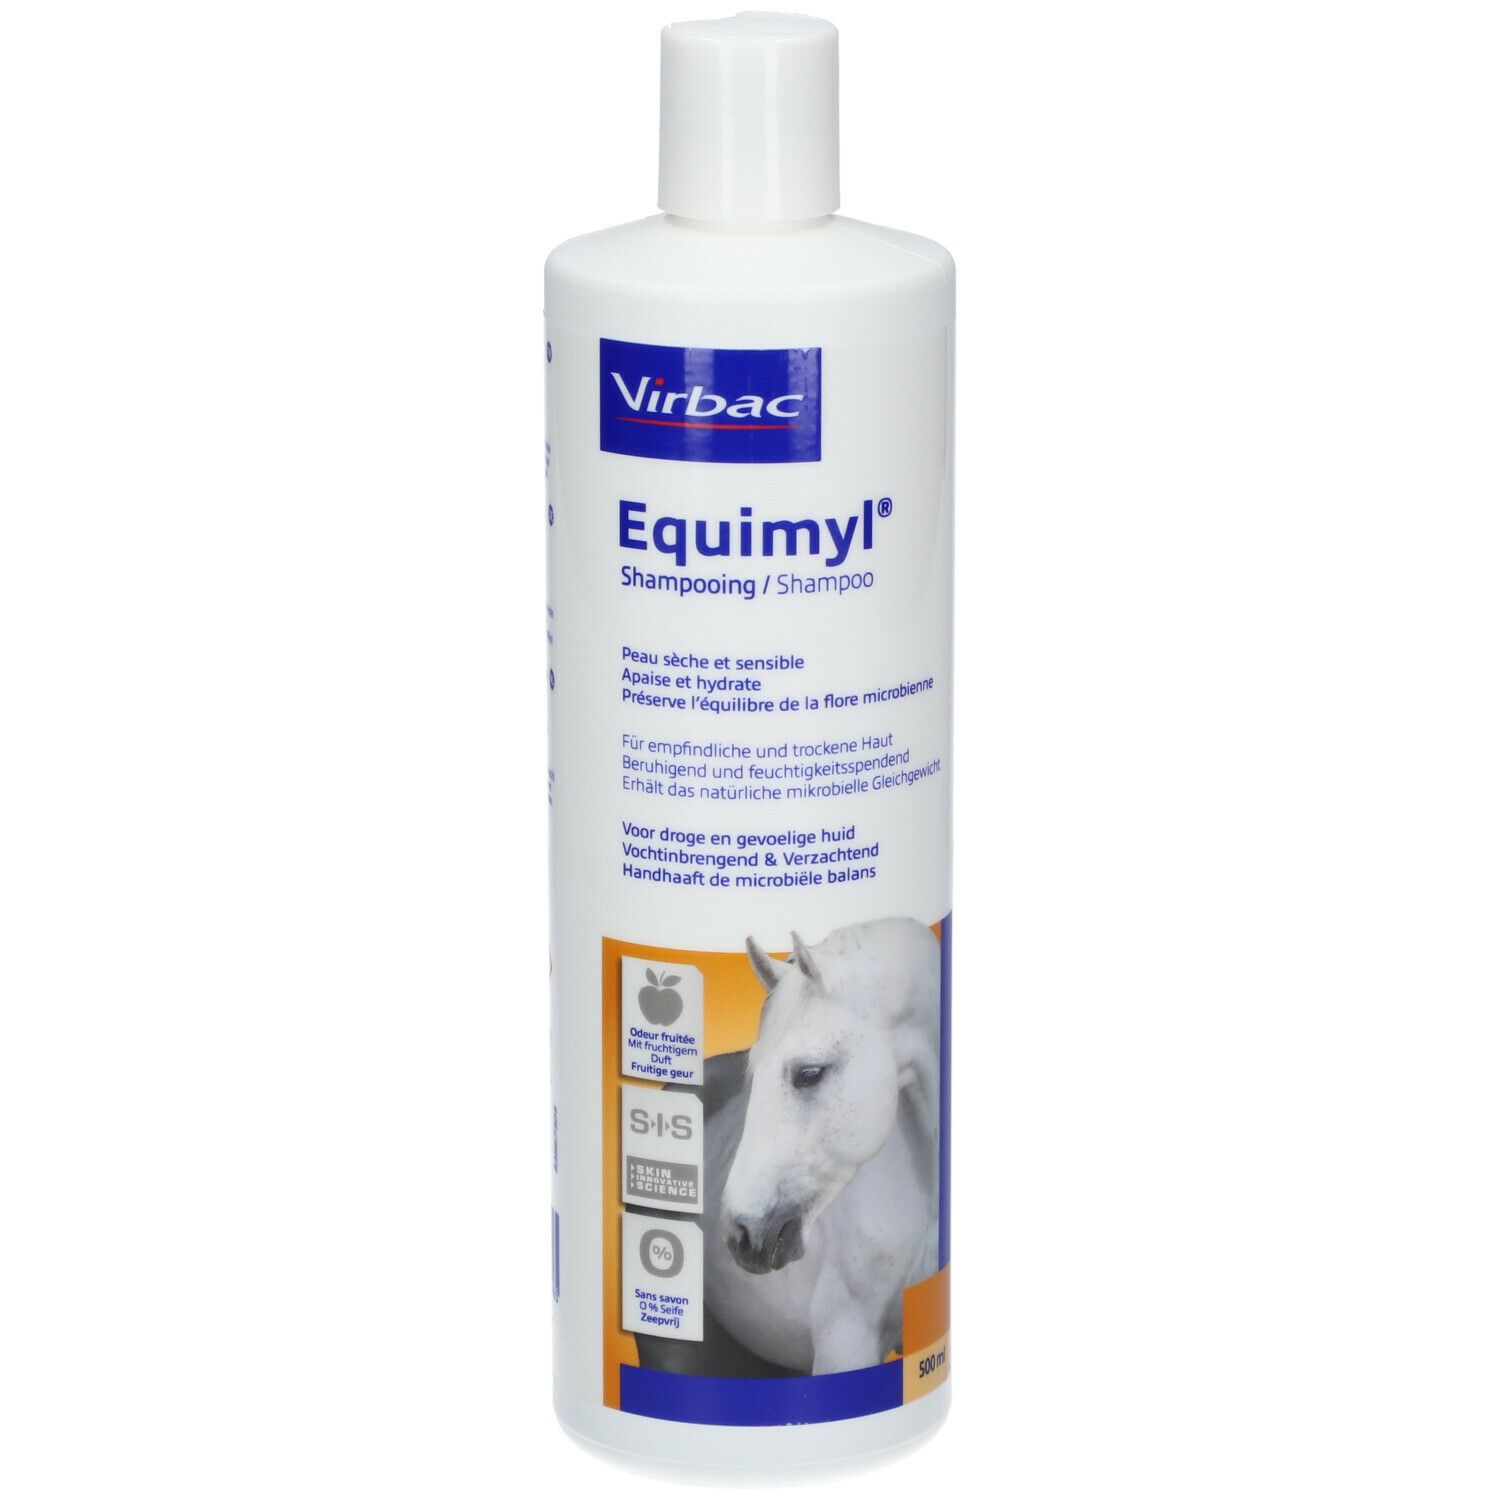 Image of Virbac Equimyl® Shampoo